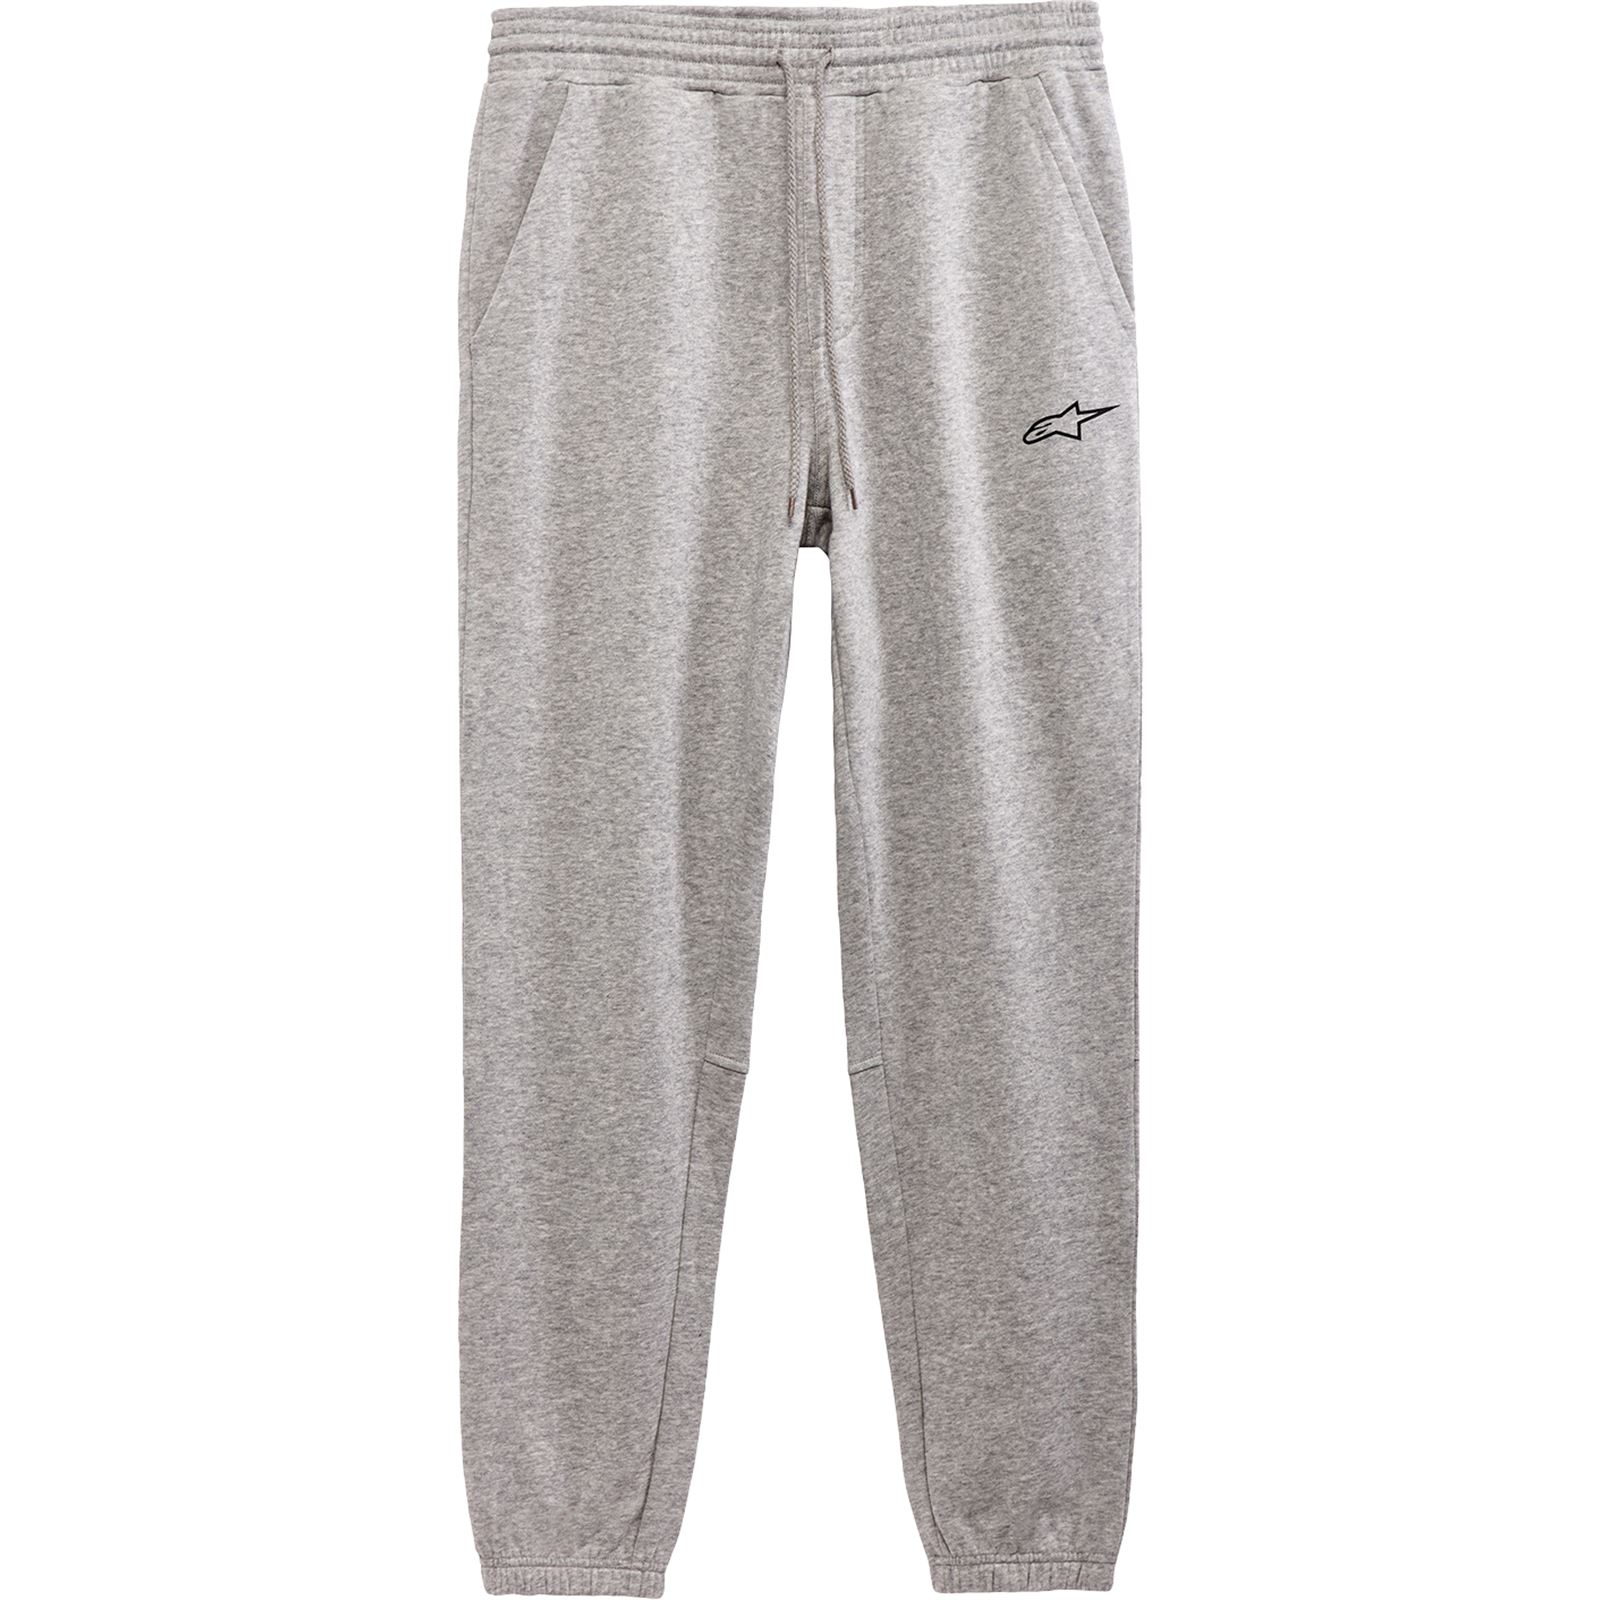 Alpinestars Rendition Pants - Gray - XL